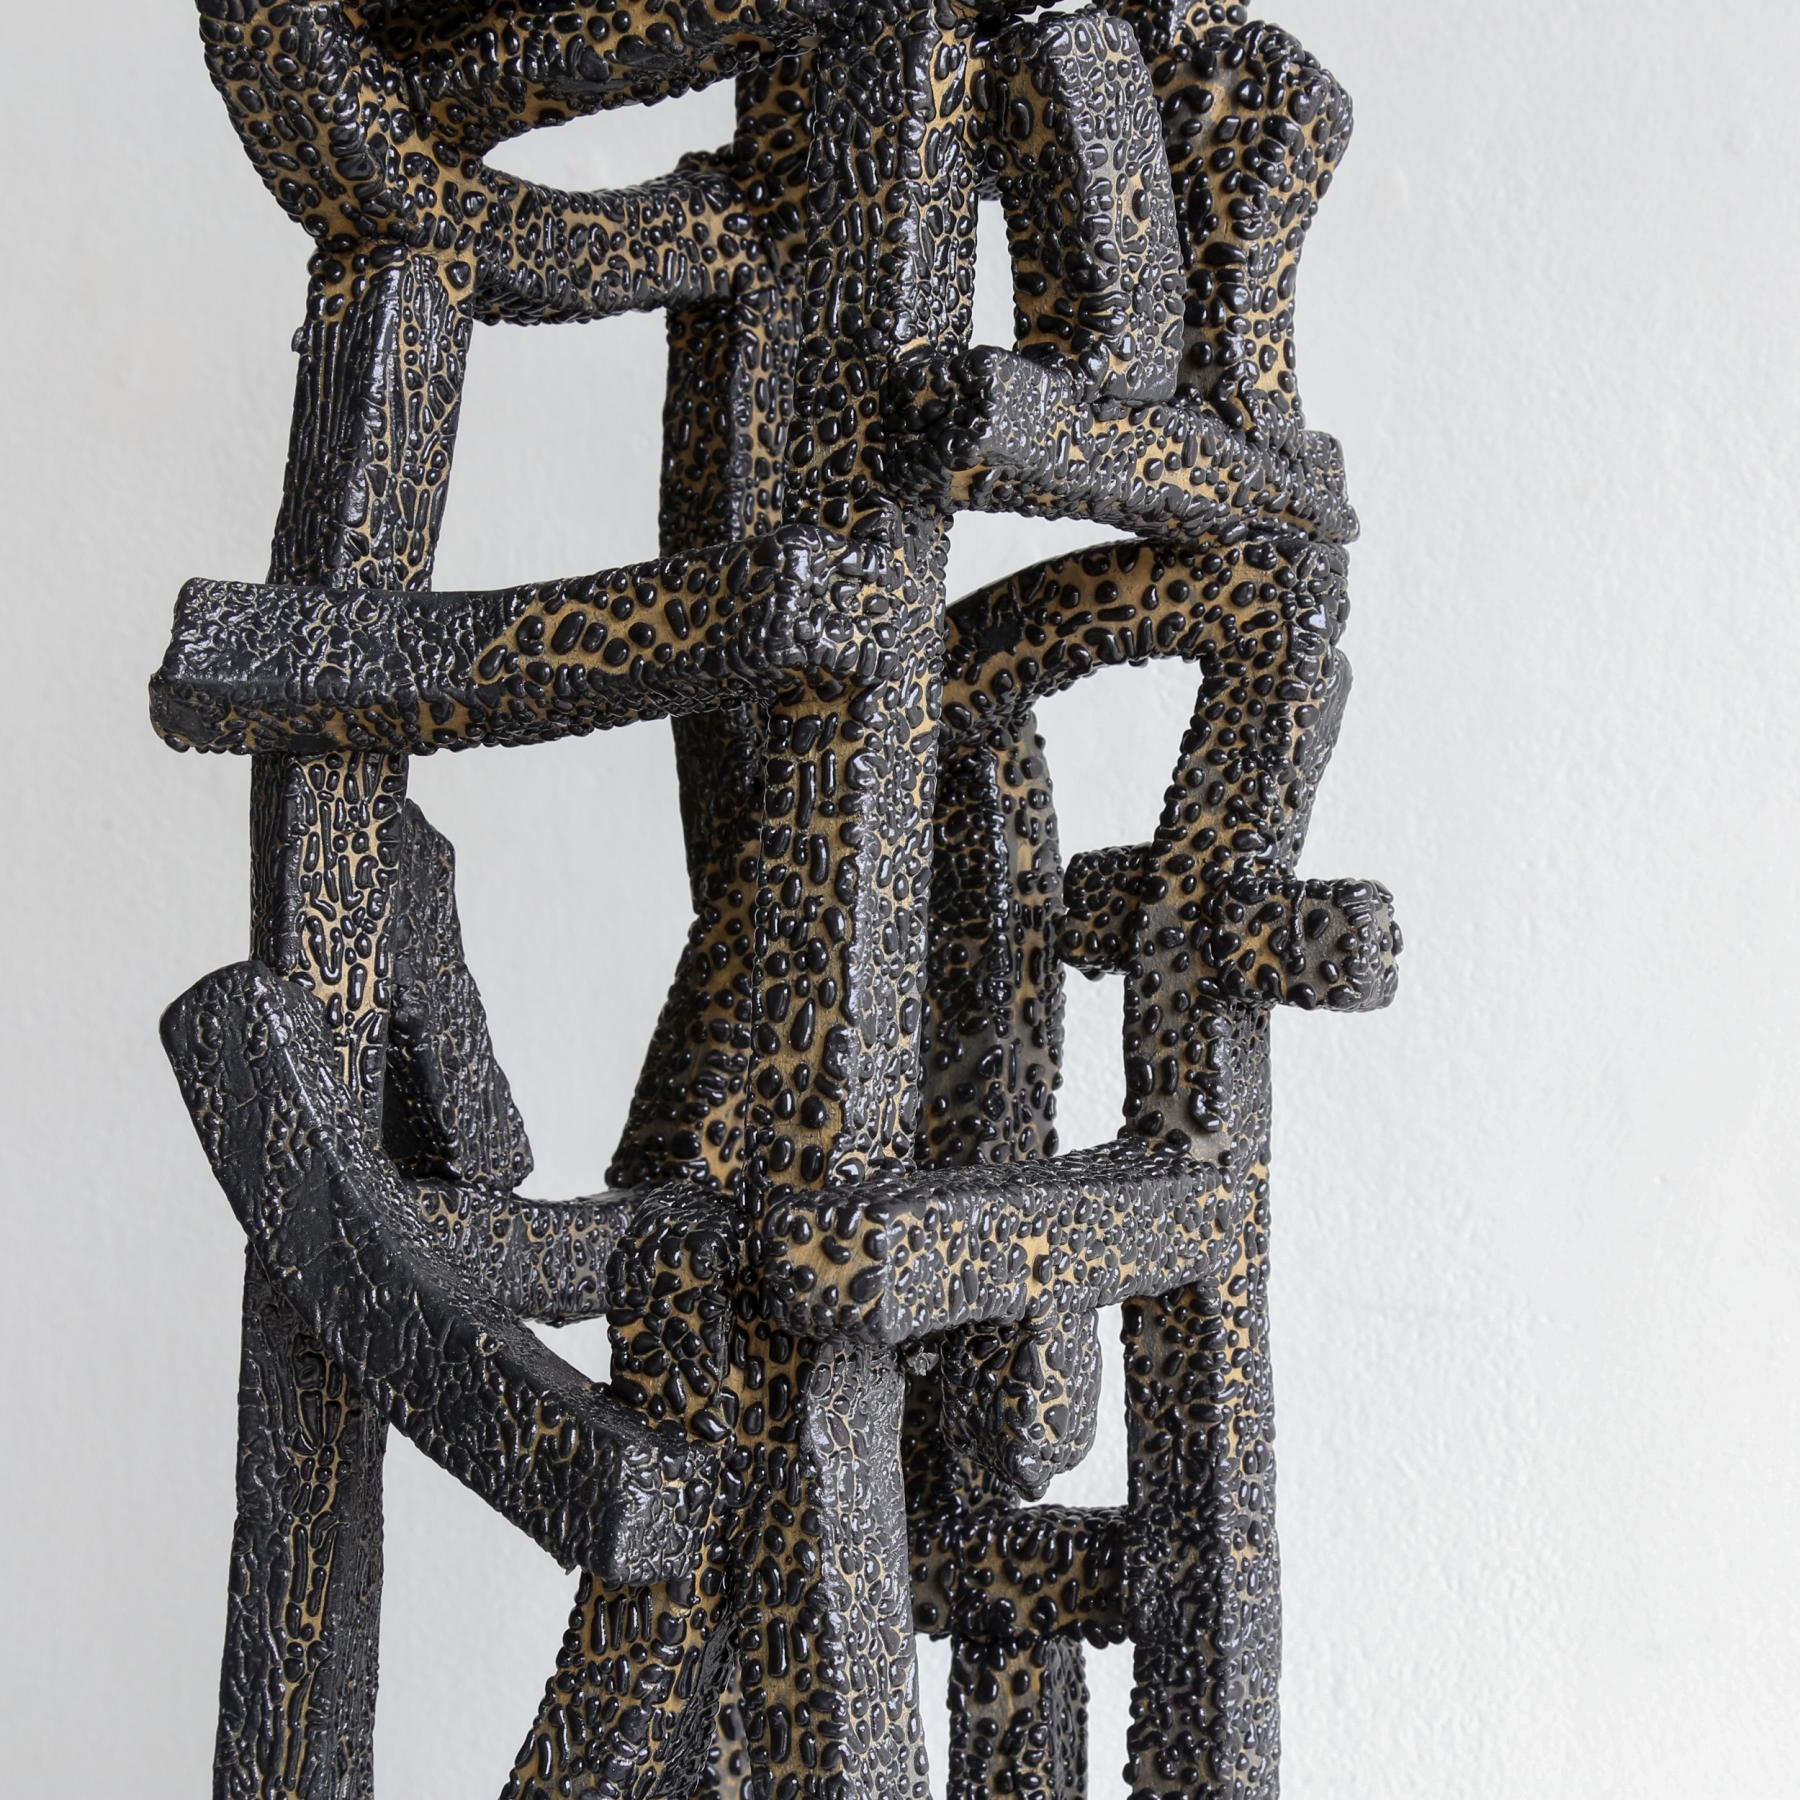 Spades - Sculpture by Brandon Reese